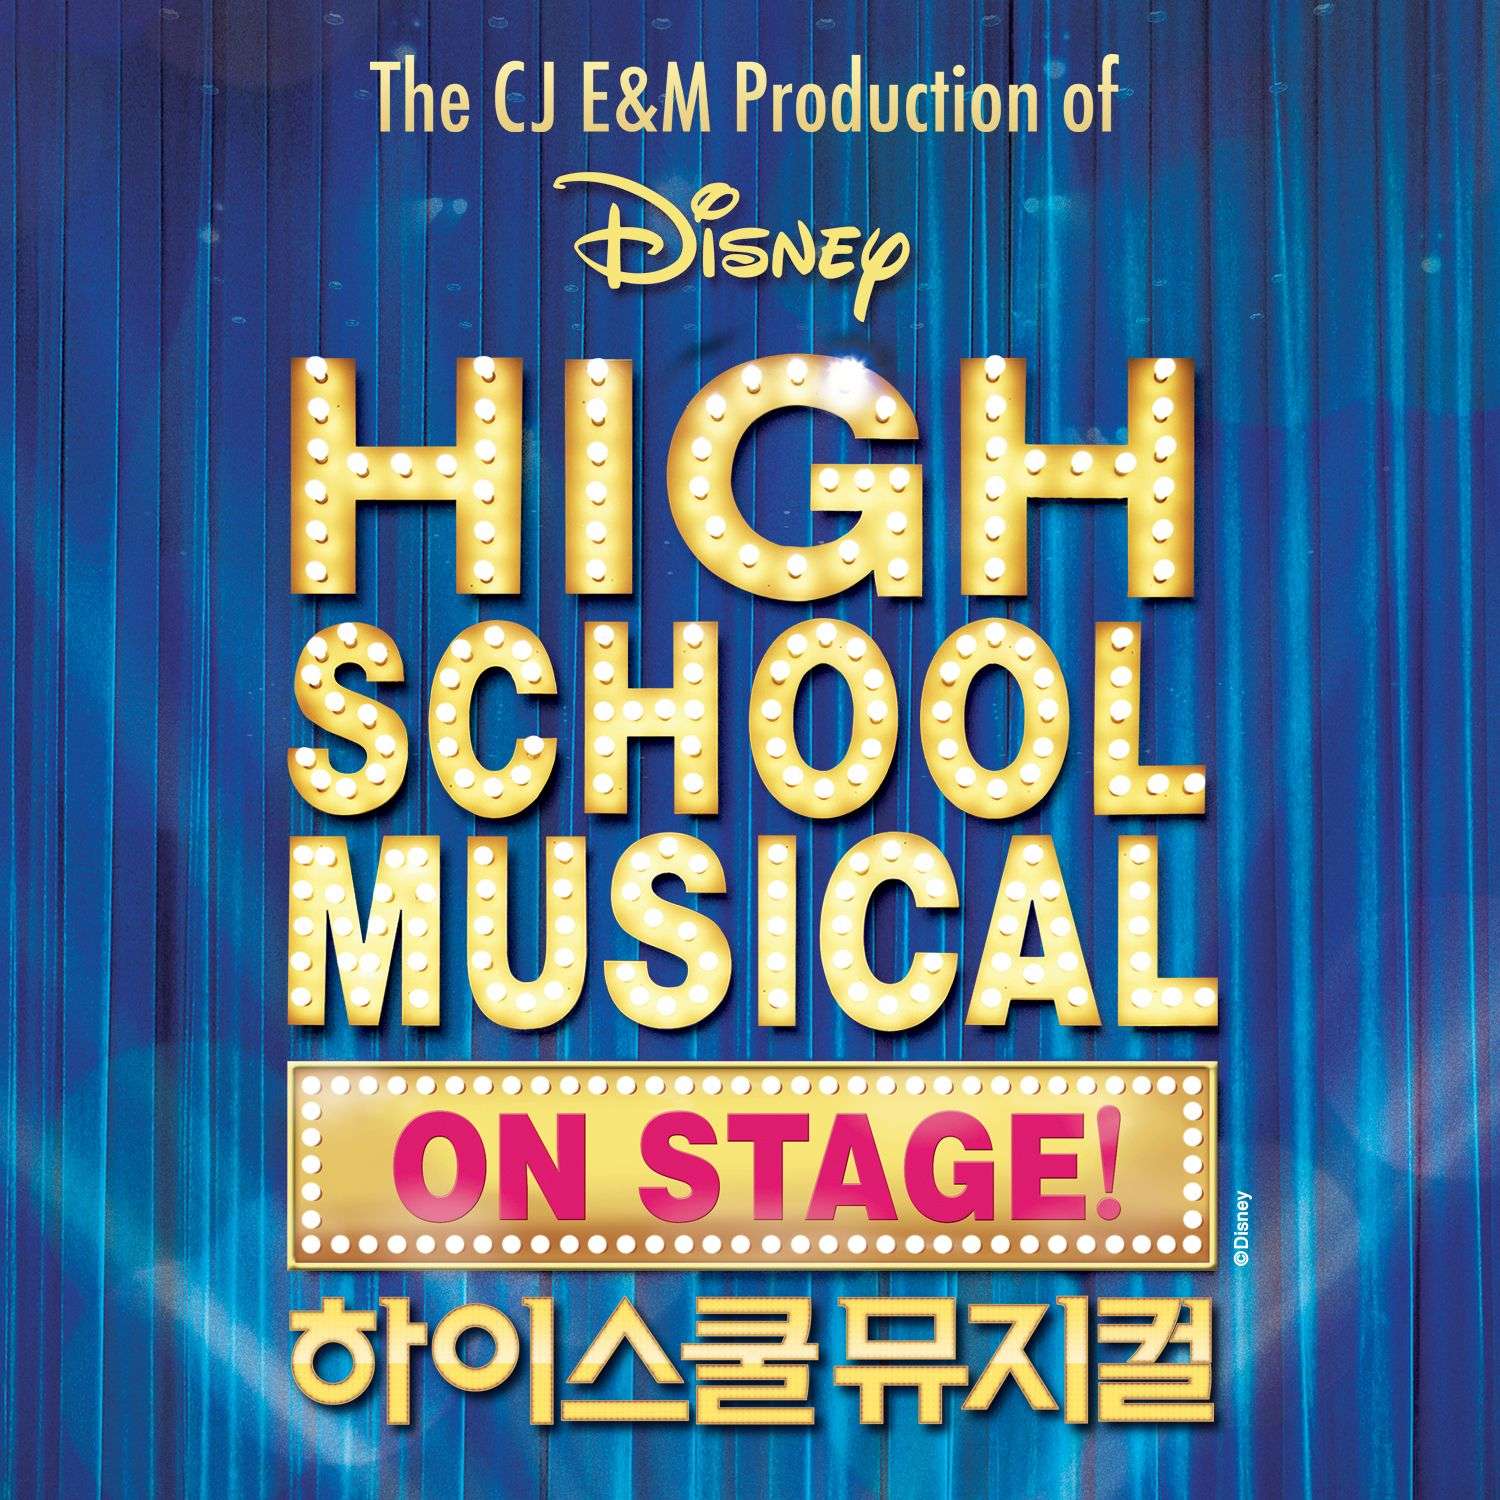 High School Musical 3 Album Mp3